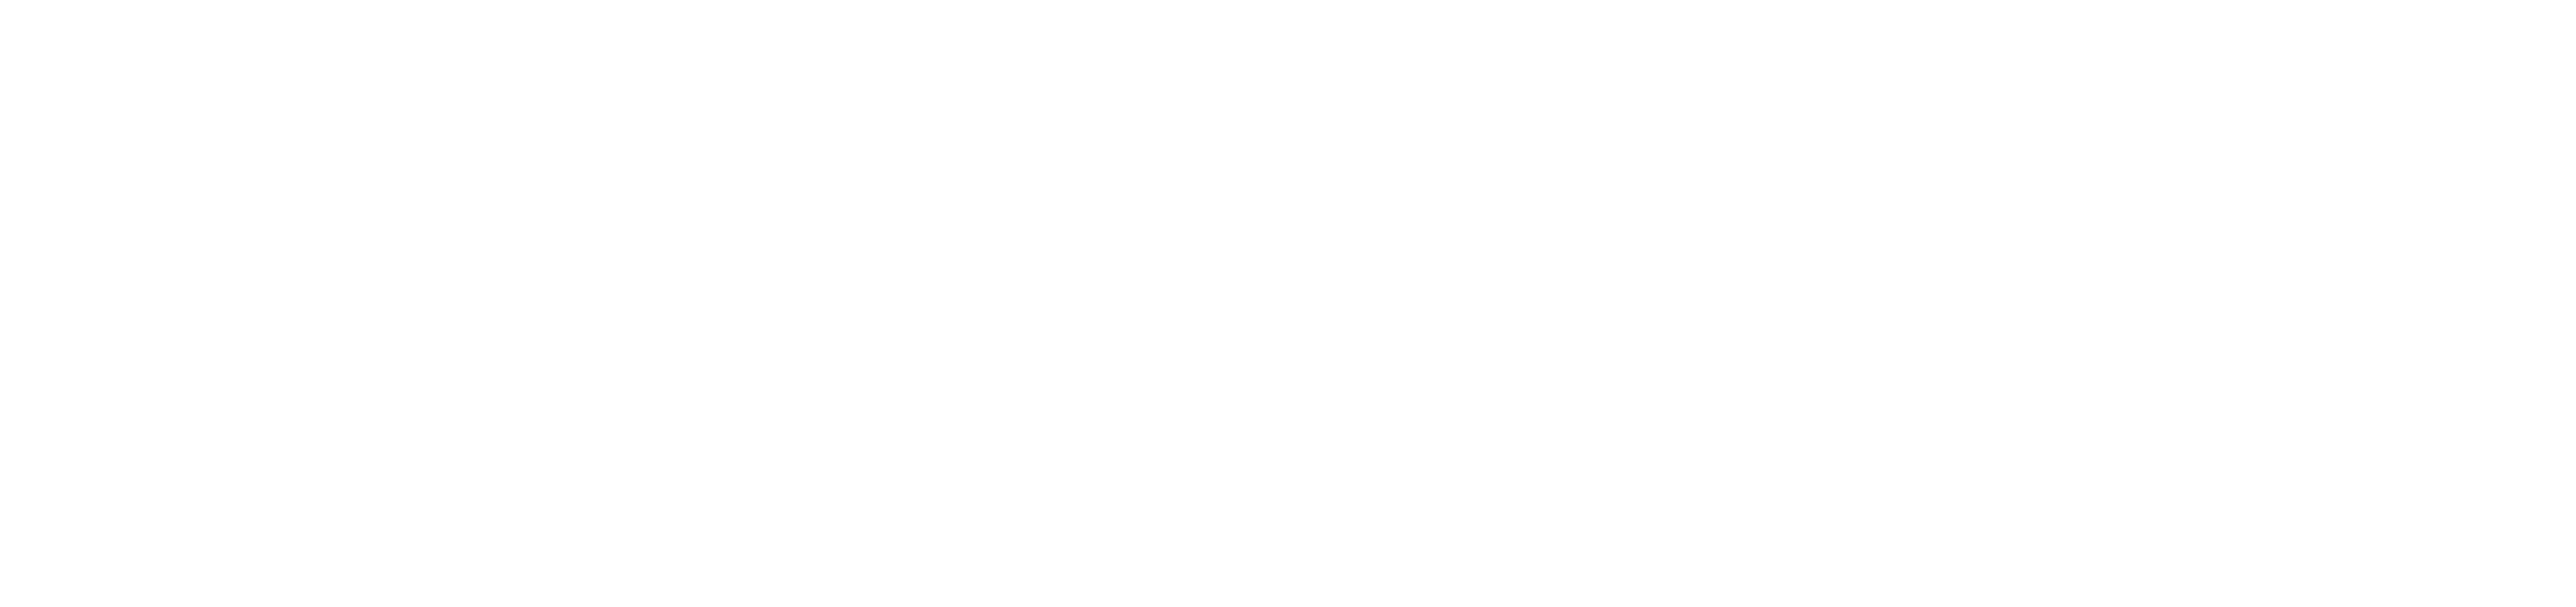 fgs organic logo